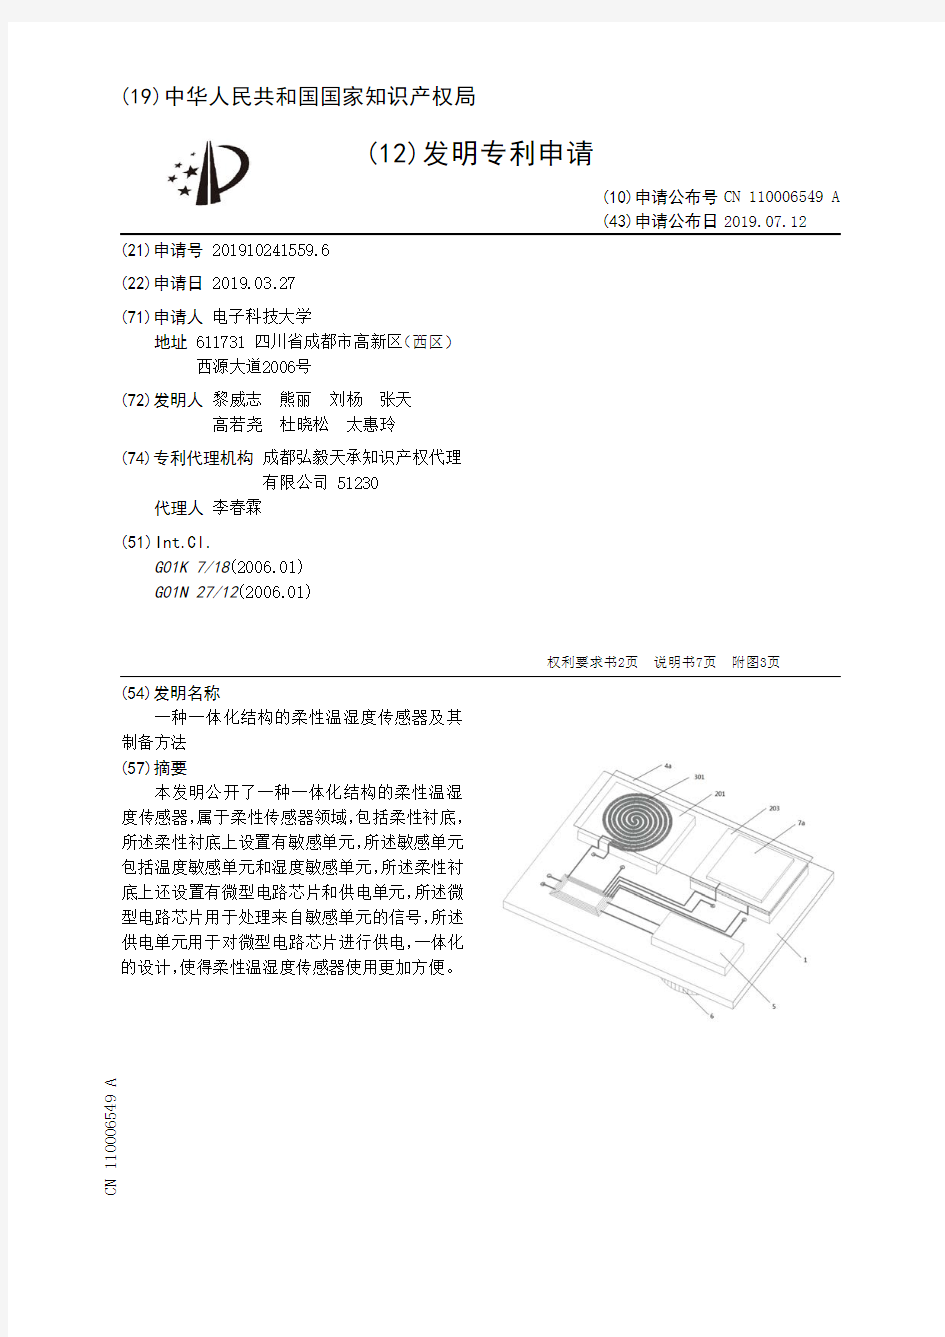 【CN110006549A】一种一体化结构的柔性温湿度传感器及其制备方法【专利】